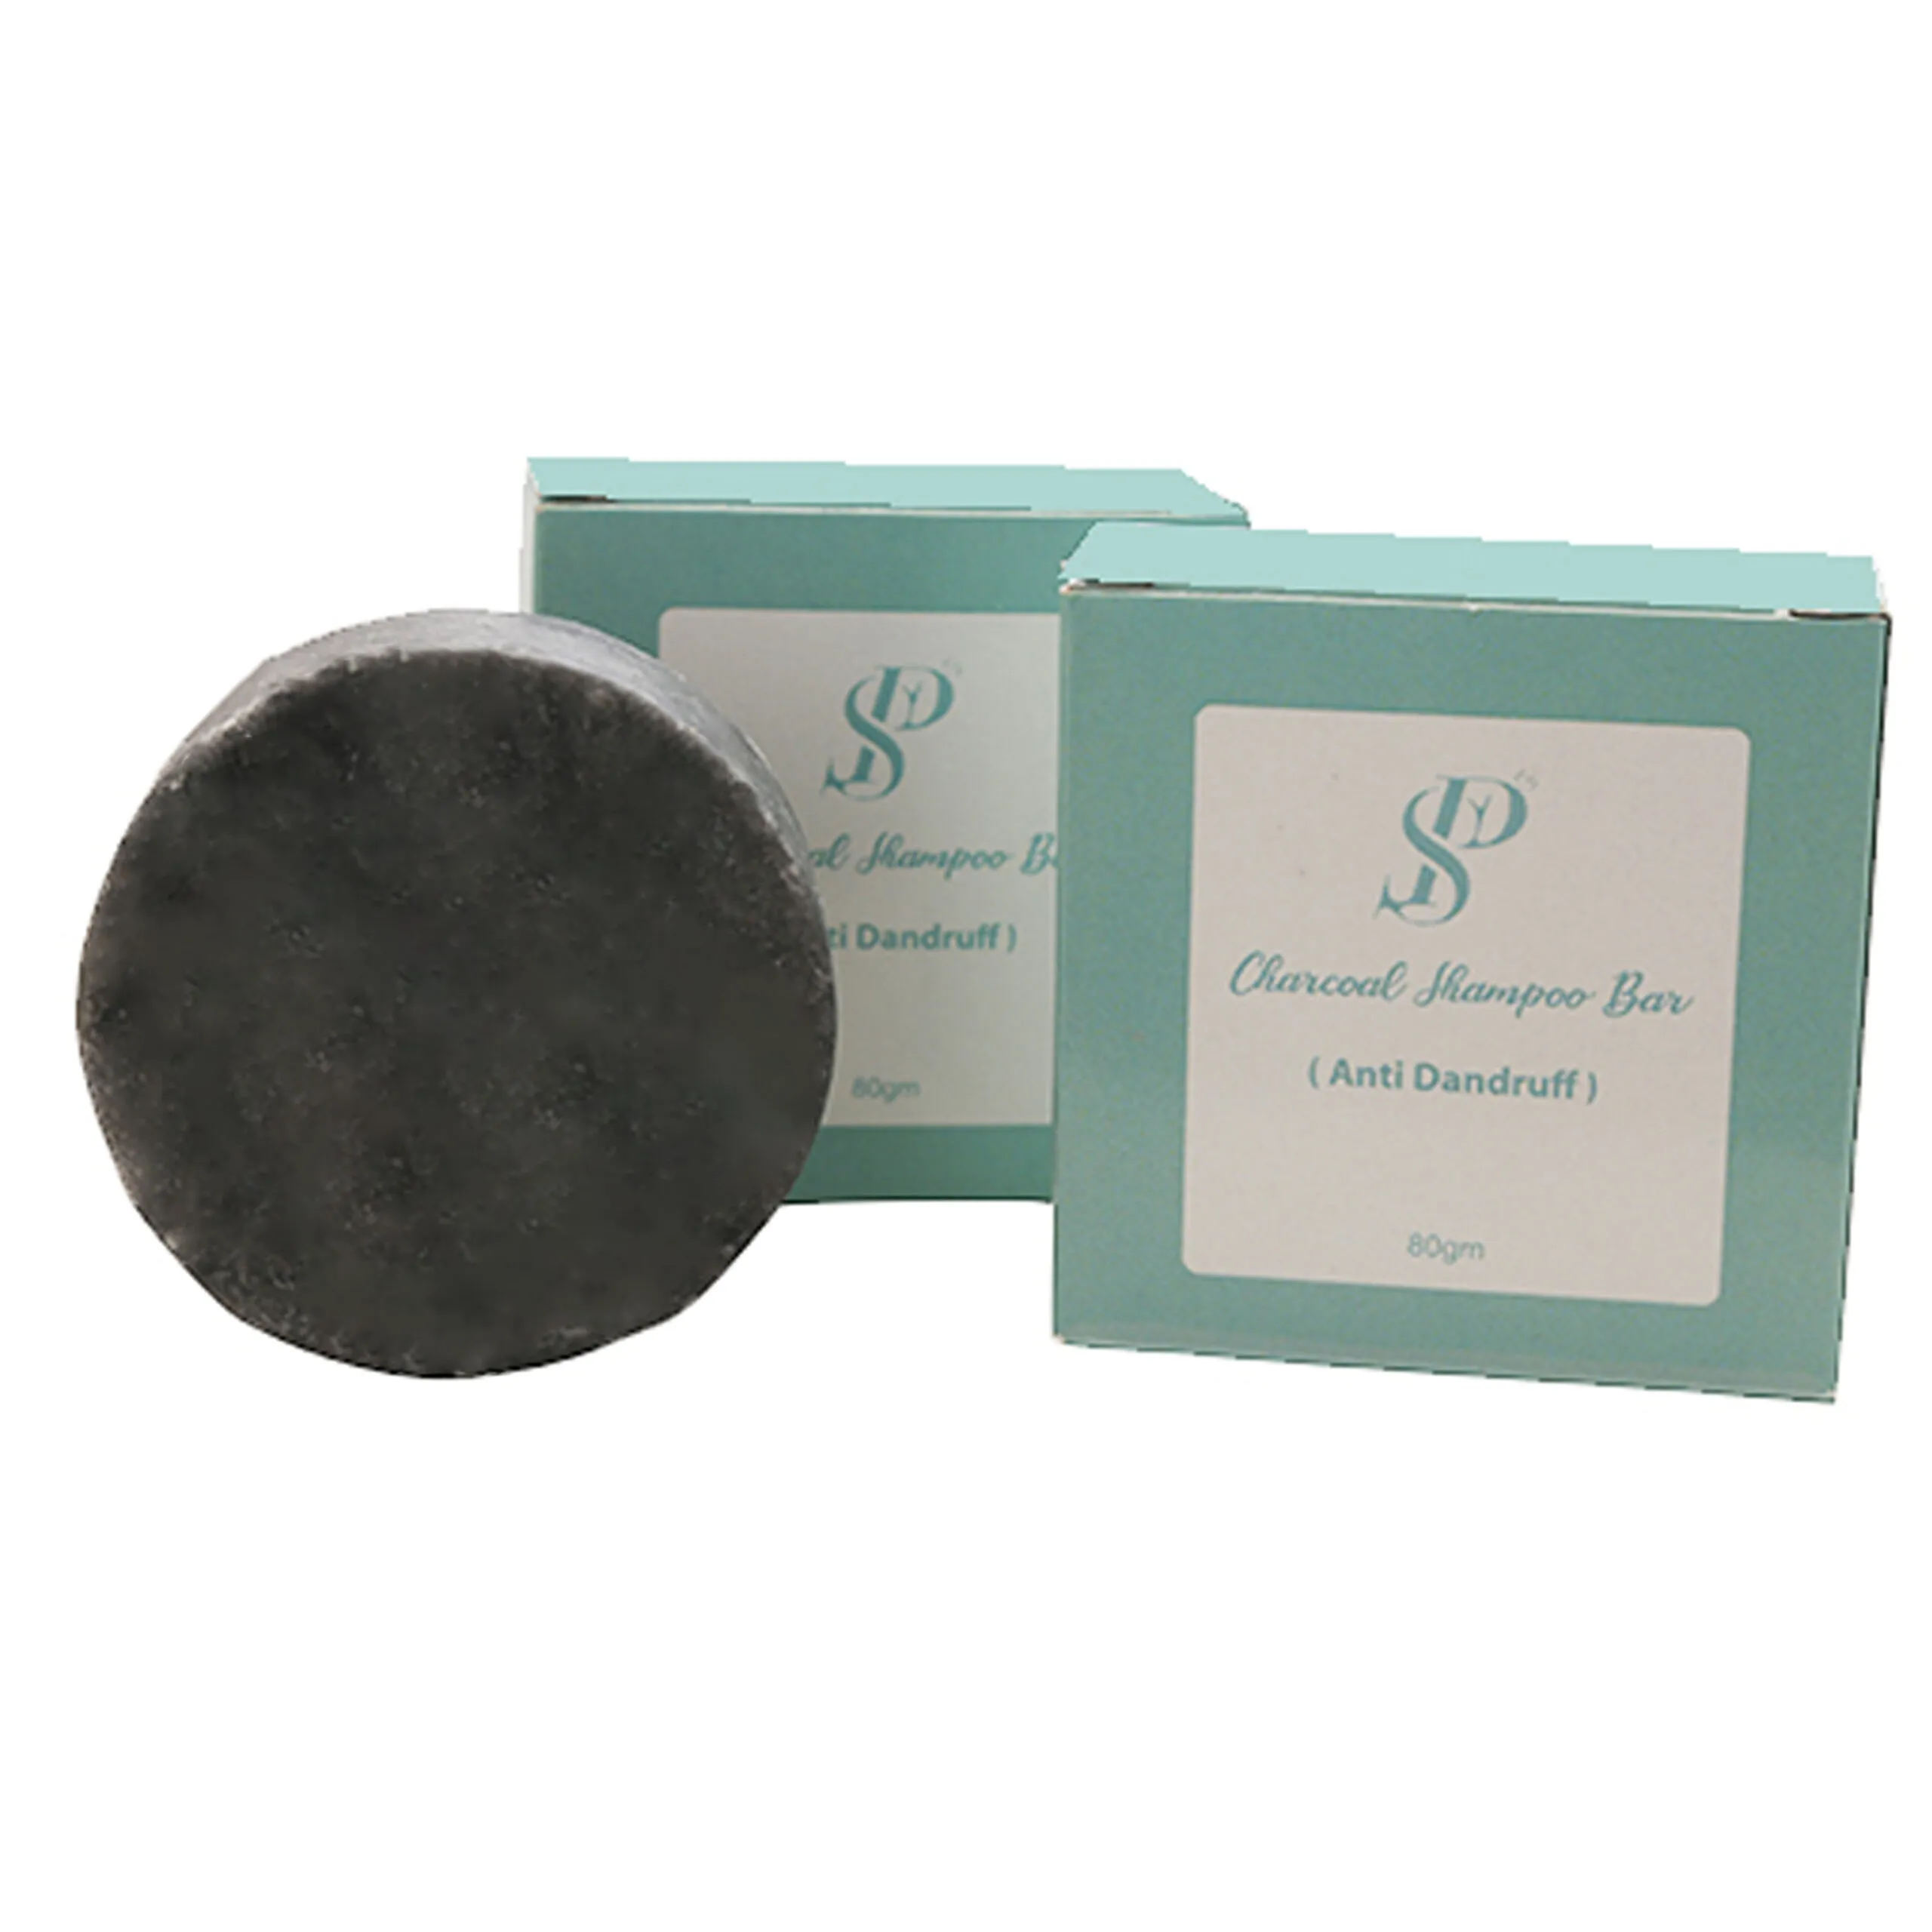 Sopure Charcoal Shampoo Bar (Anti Dandruff) 80g